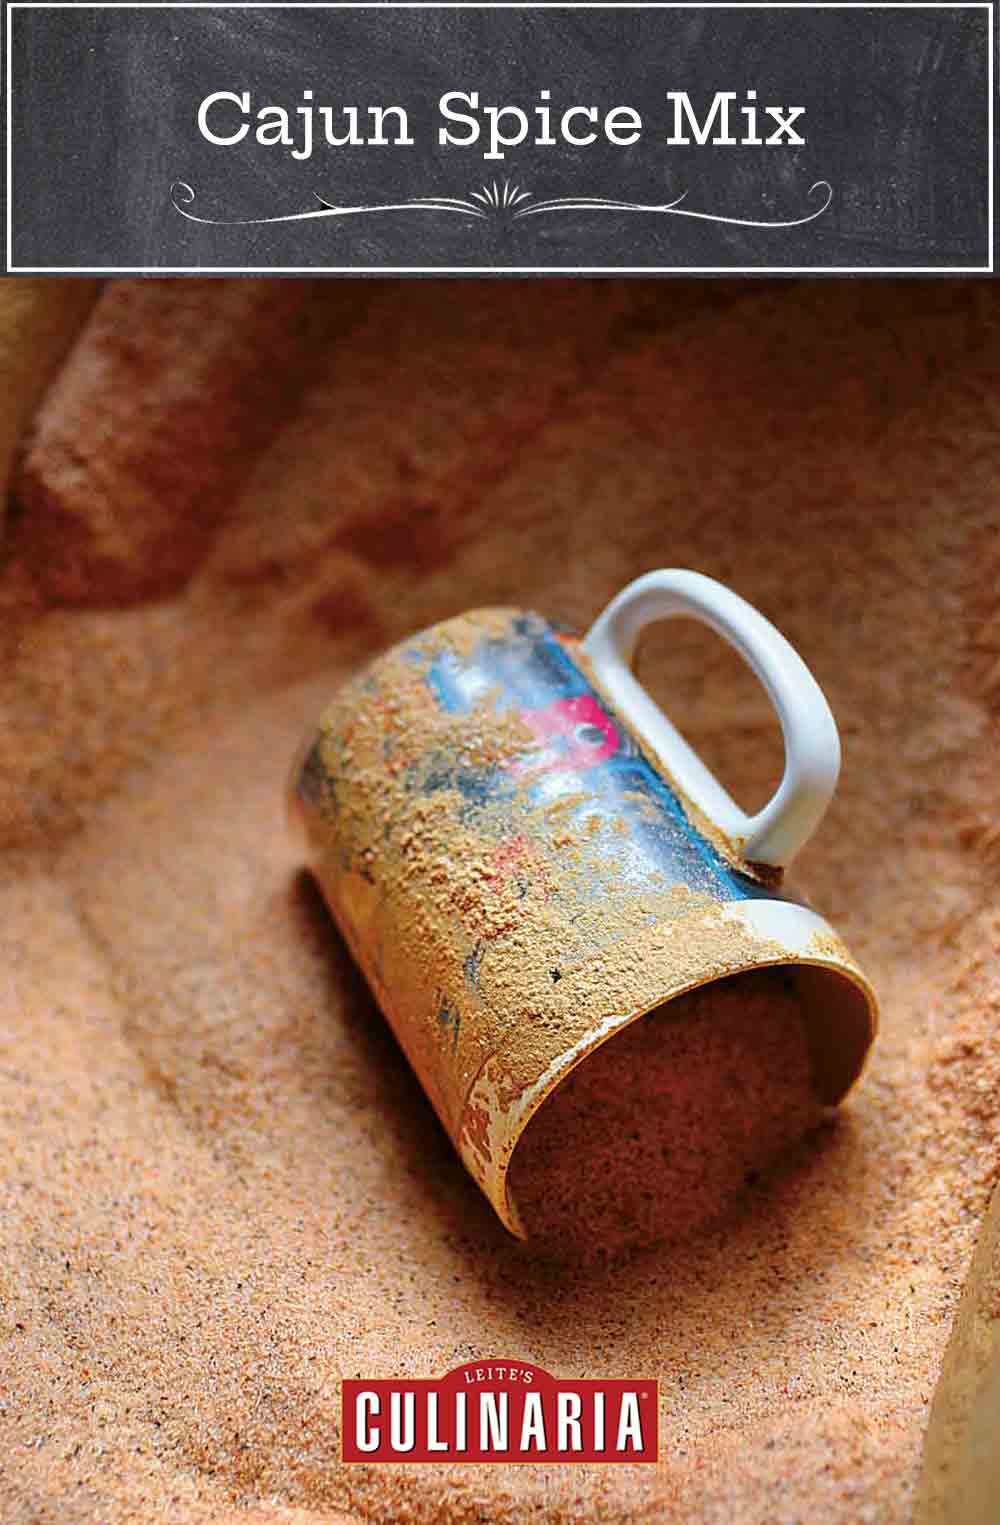 A mug lying on its side in a bin of cajun spice mix.